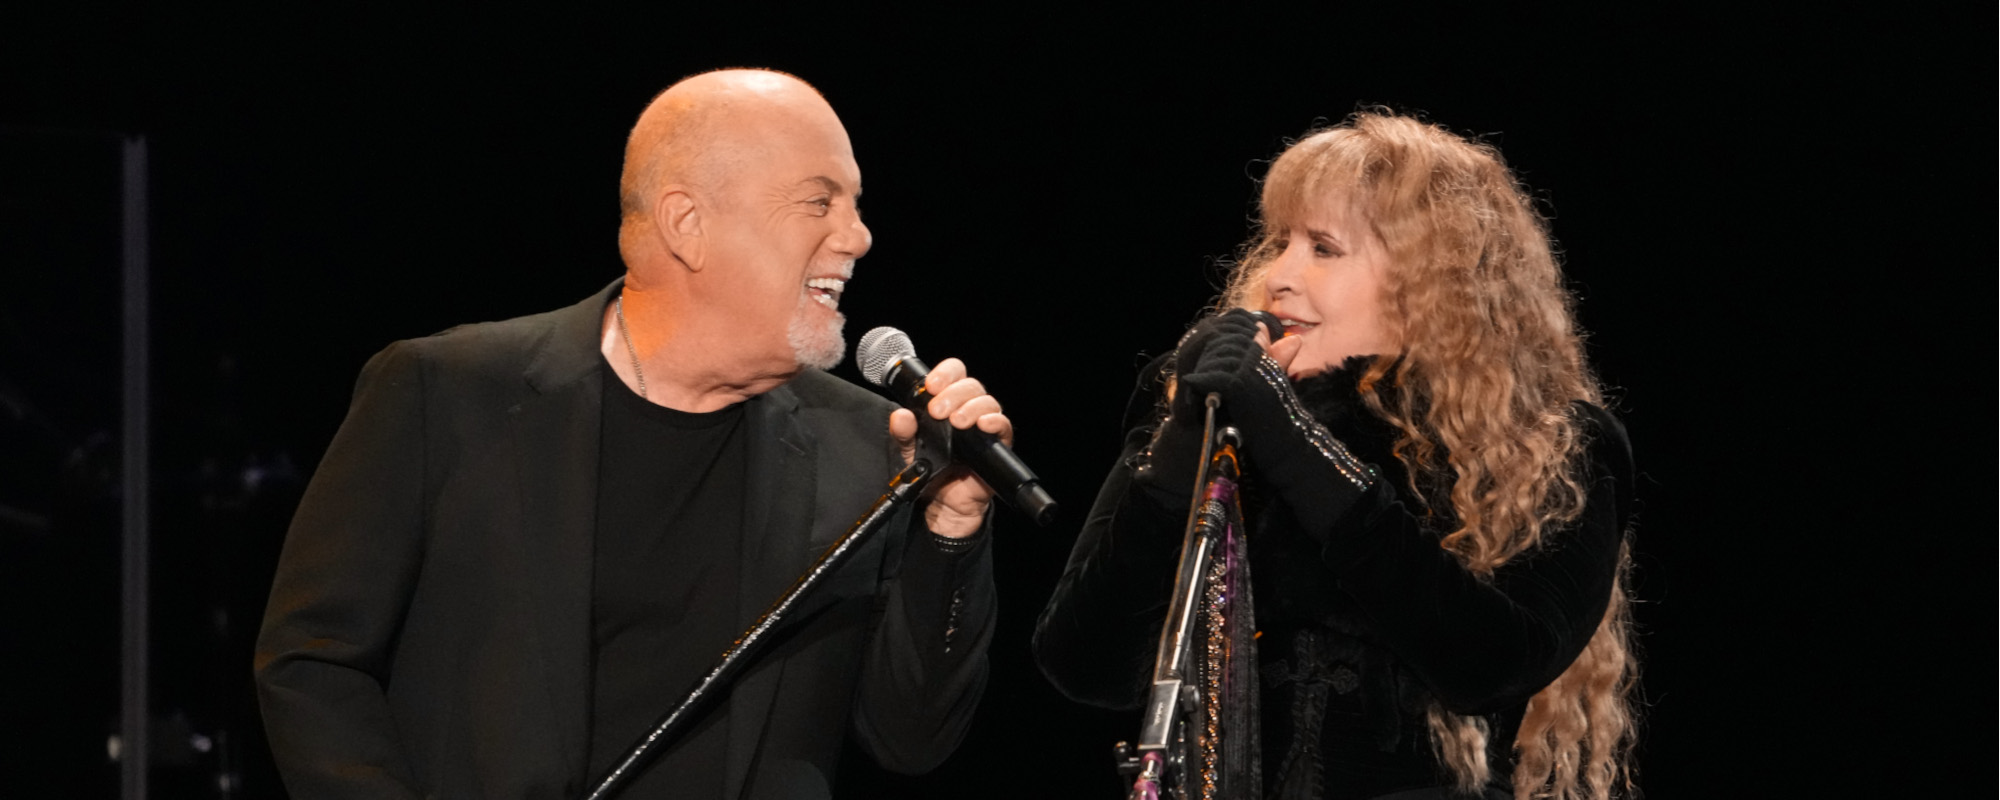 Watch: Stevie Nicks and Billy Joel Perform “Stop Draggin’ My Heart Around”